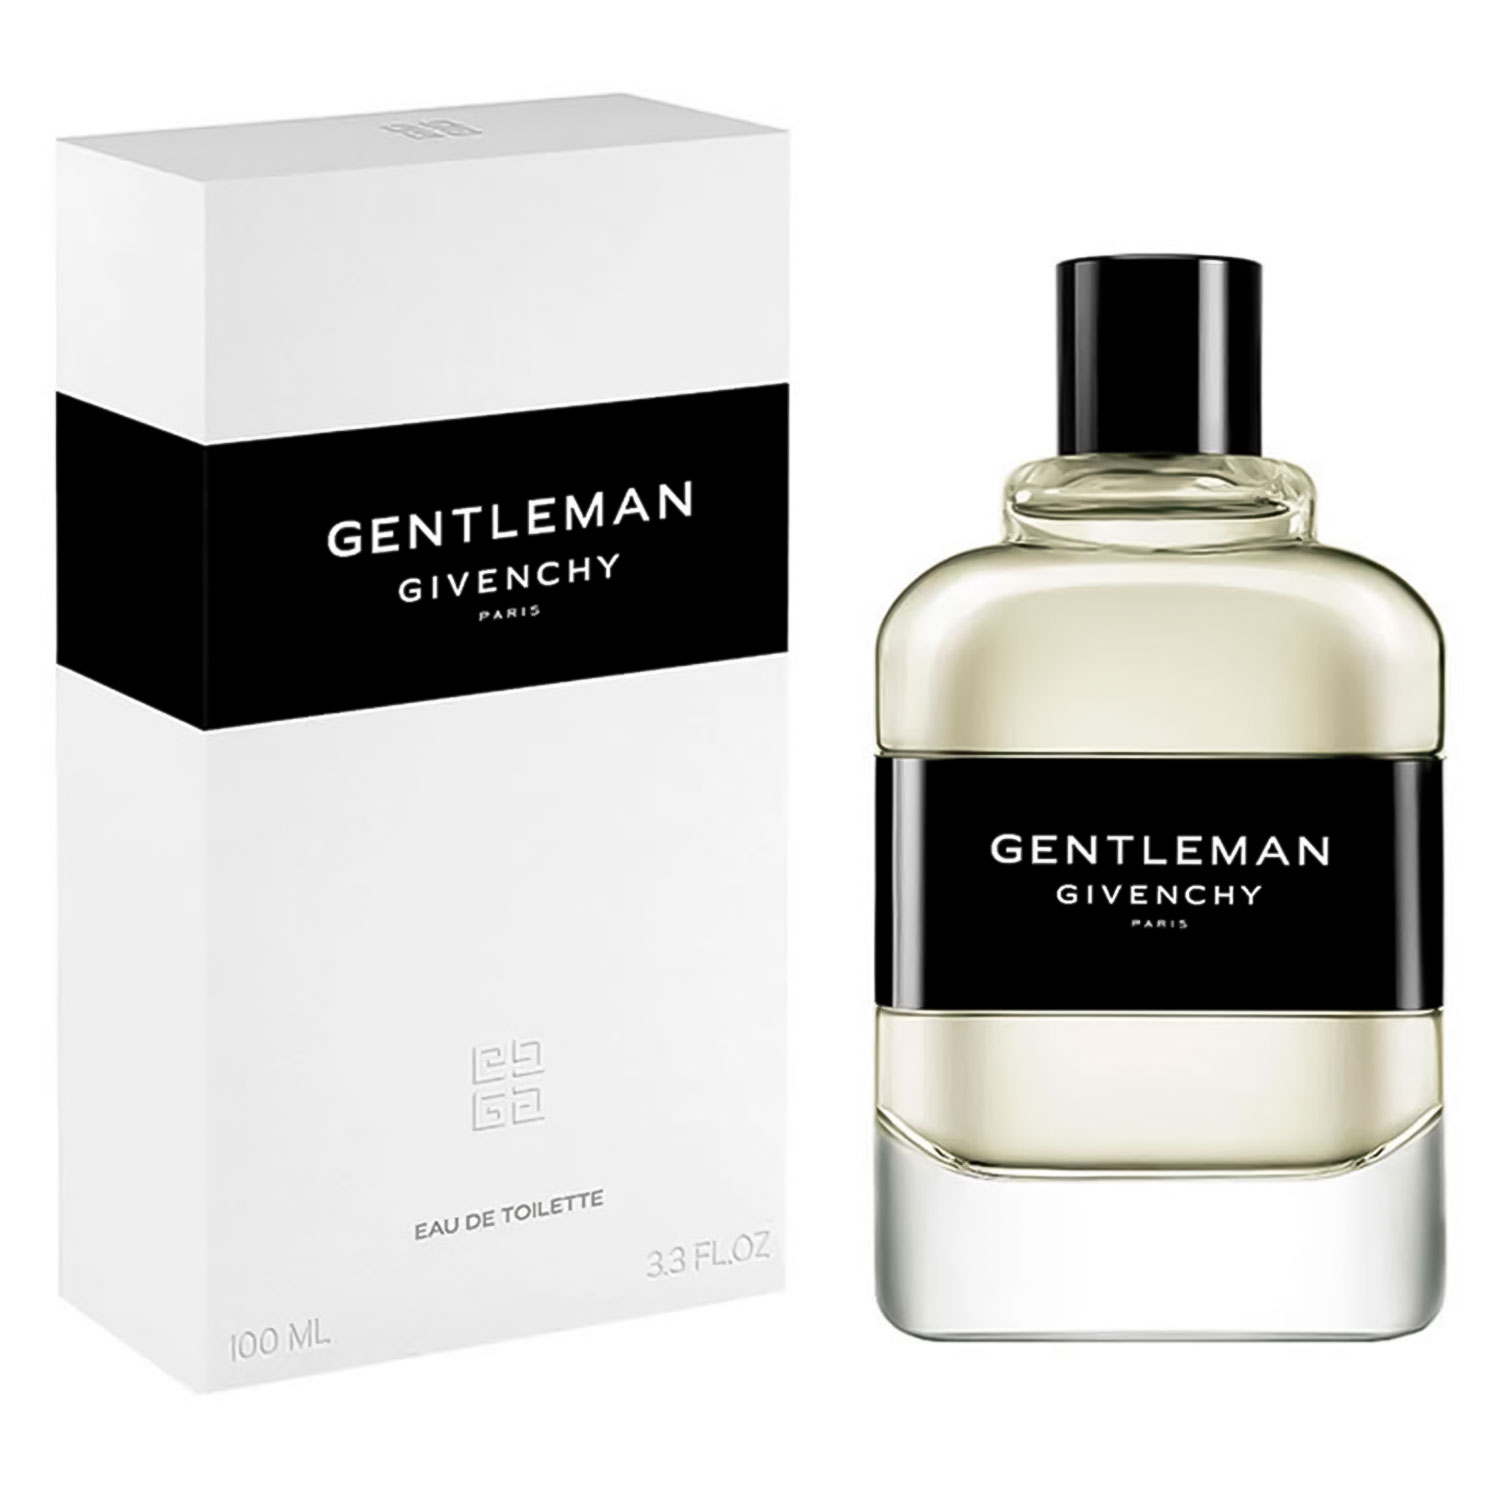 Perfume Givenchy Gentleman Eau de Toilette Masculino 100ml
